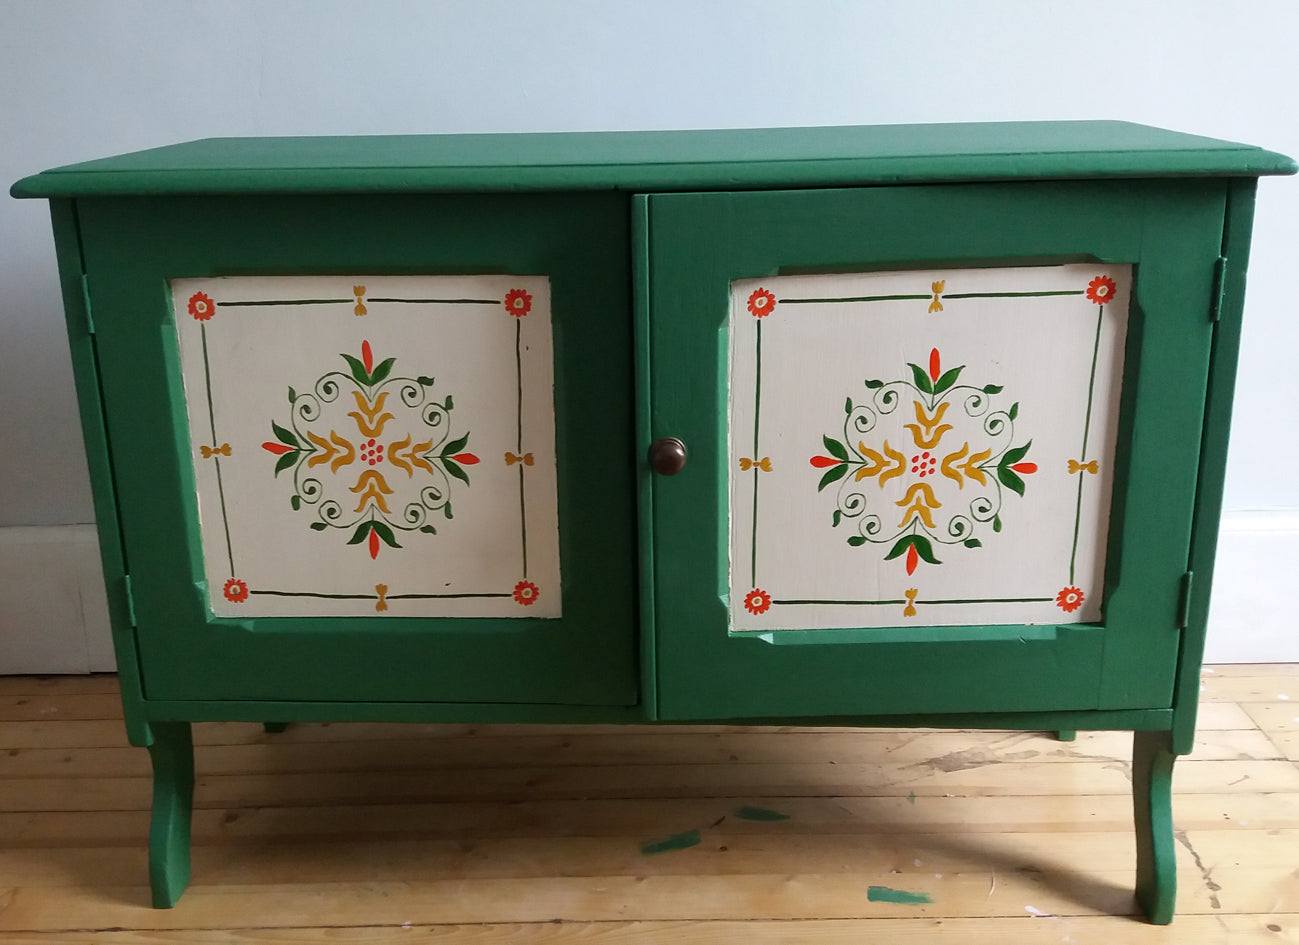 Original hand painted folk art pine cabinet great for storing Vinyl!